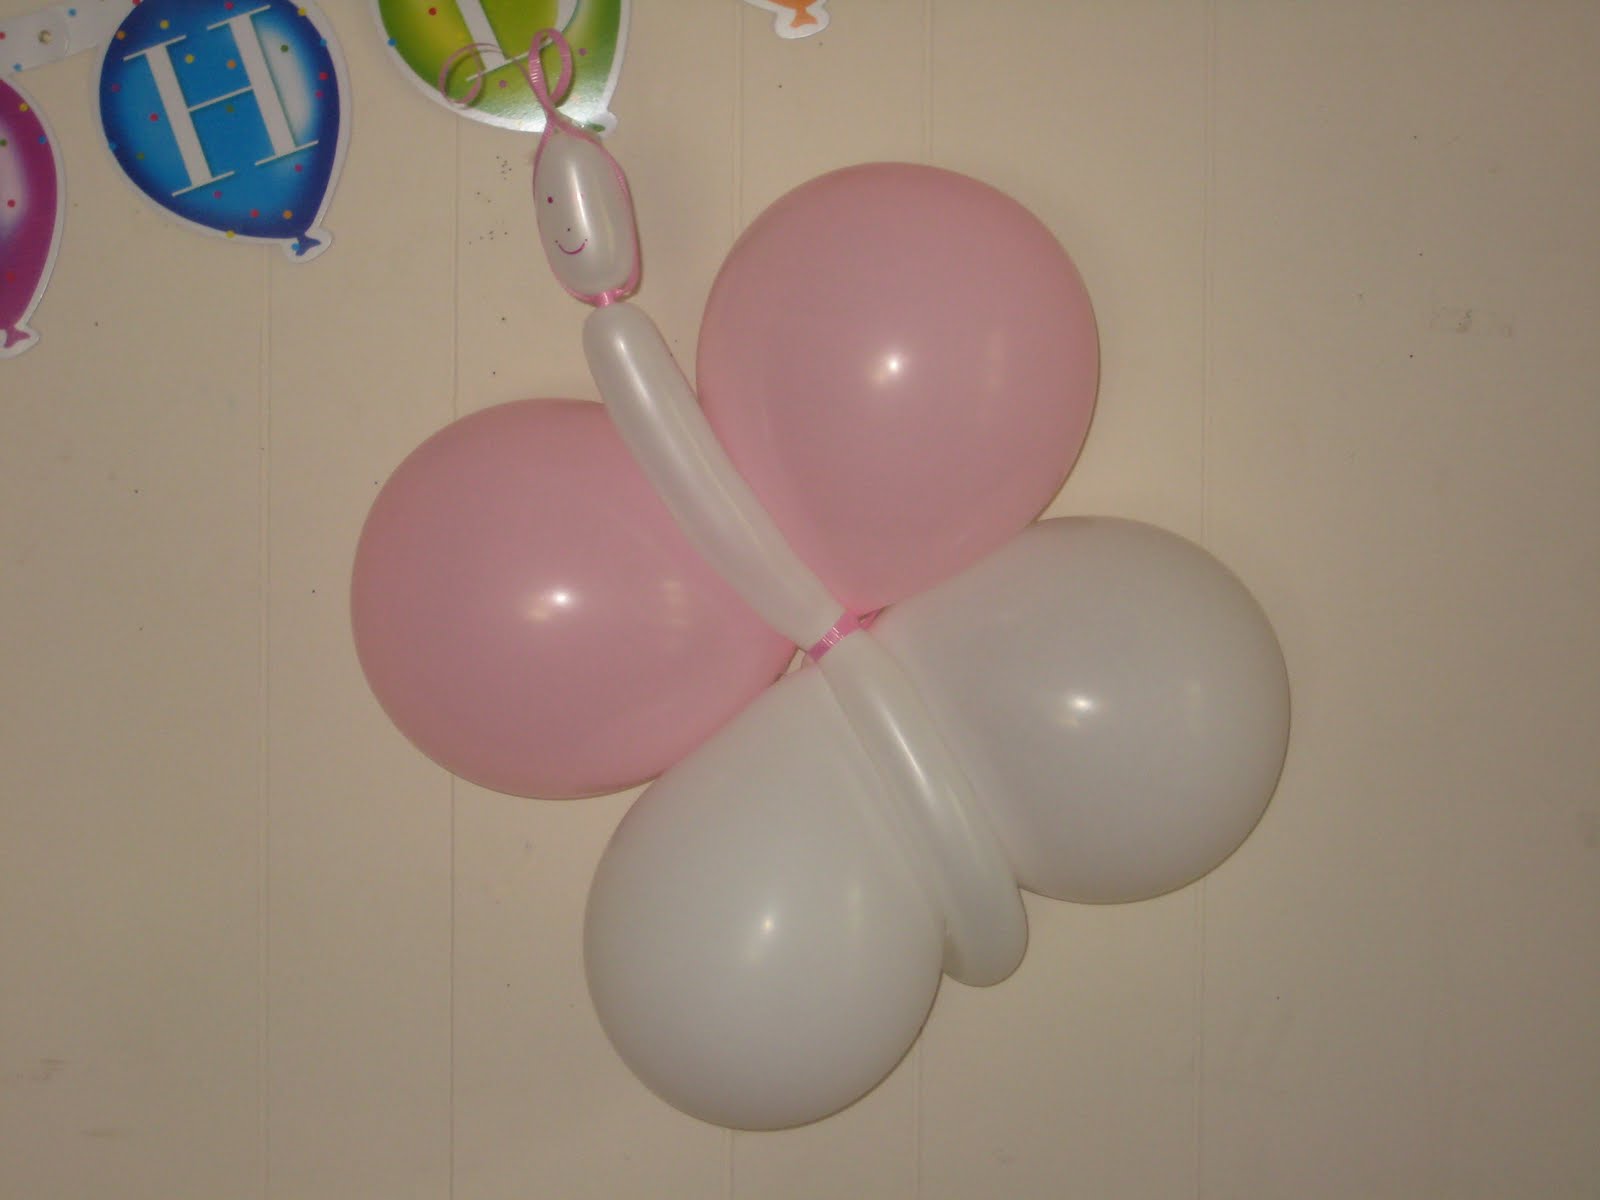 My Avocations: Balloon decoration